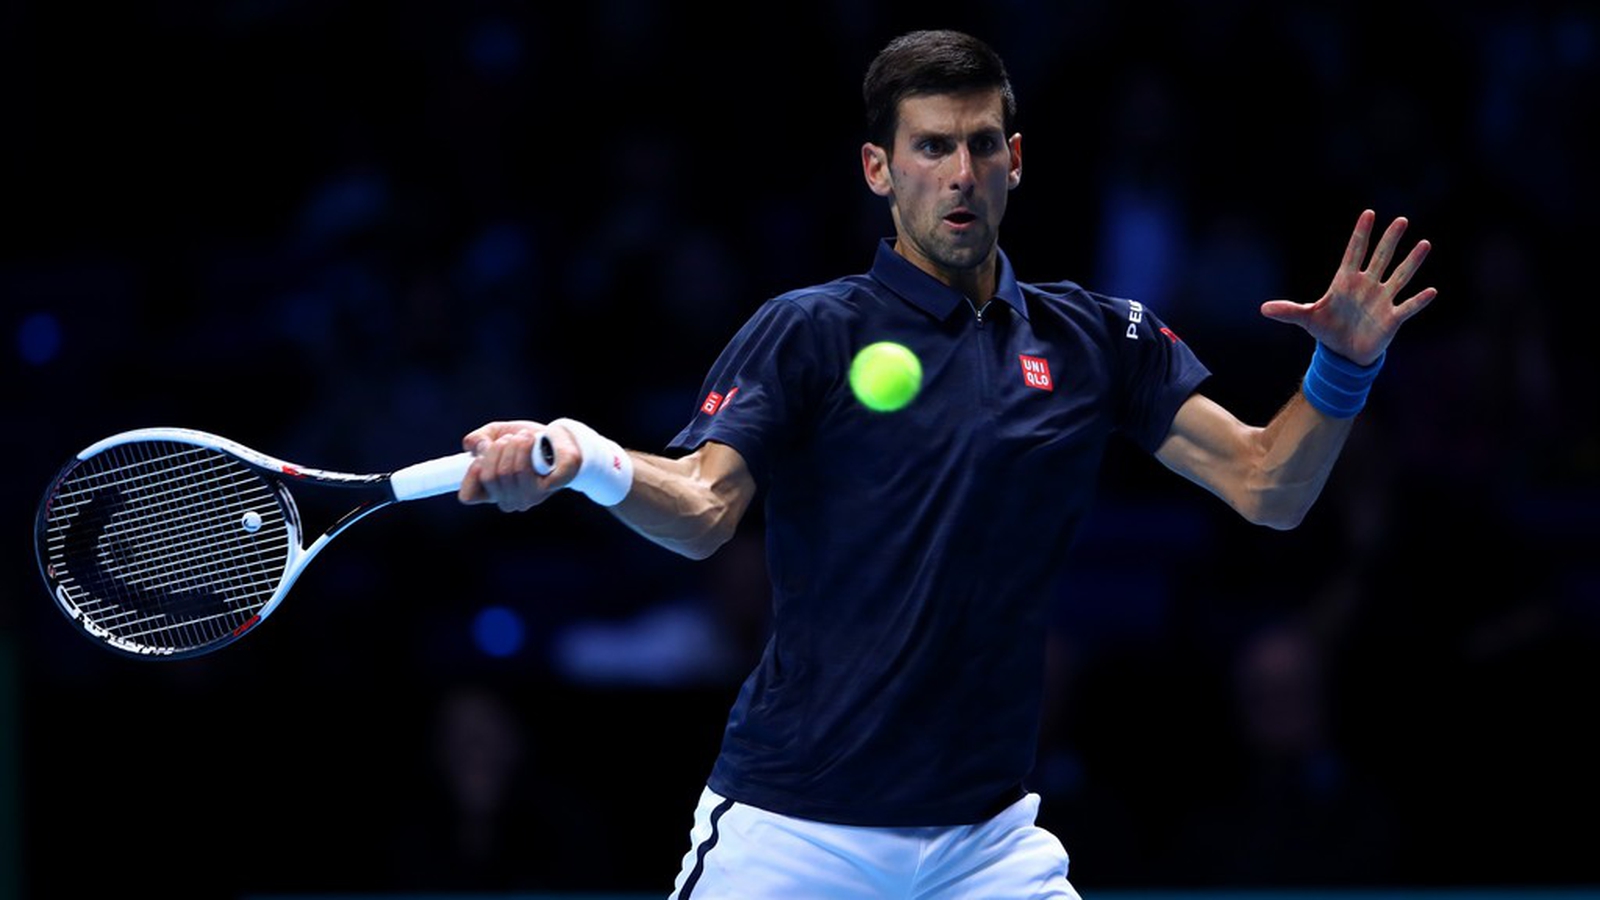 Novak Djokovic shows resolve to make London semis - RTE.ie